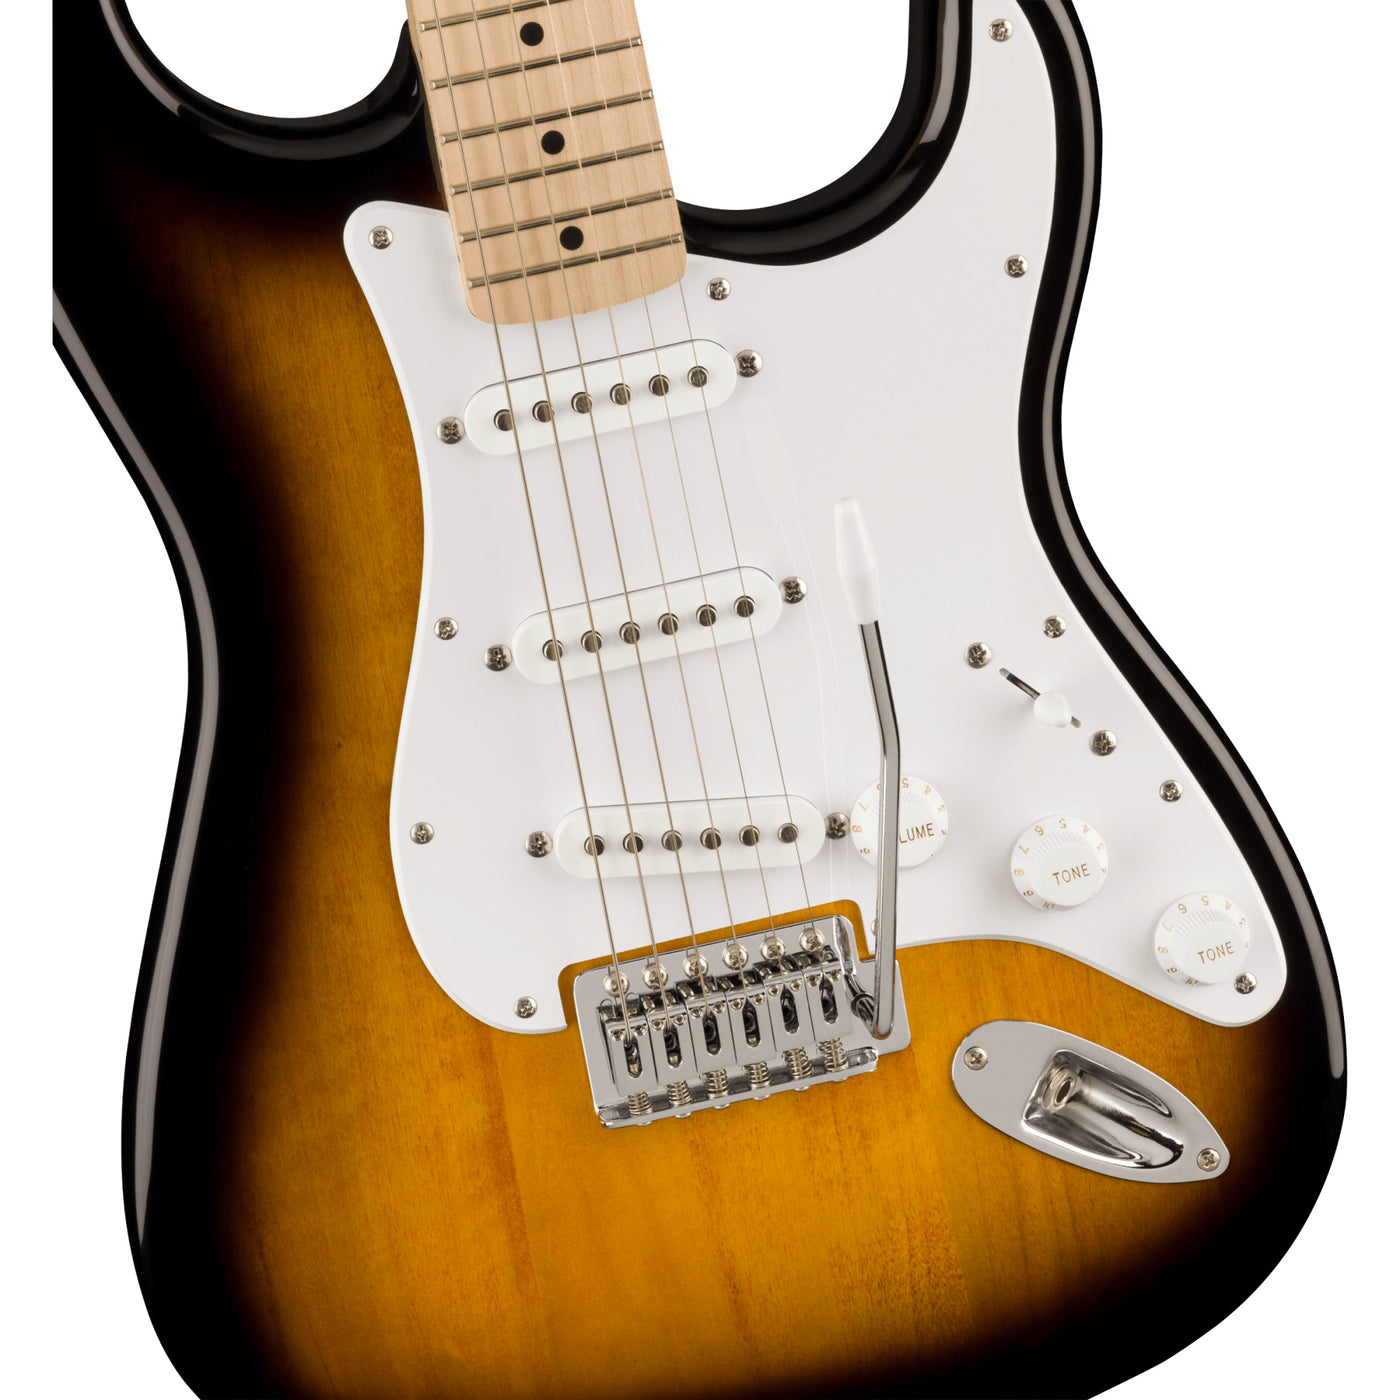 Squier Sonic Stratocaster Electric Guitar Essentials Pack, 2-Color Sunburst (0371720003)